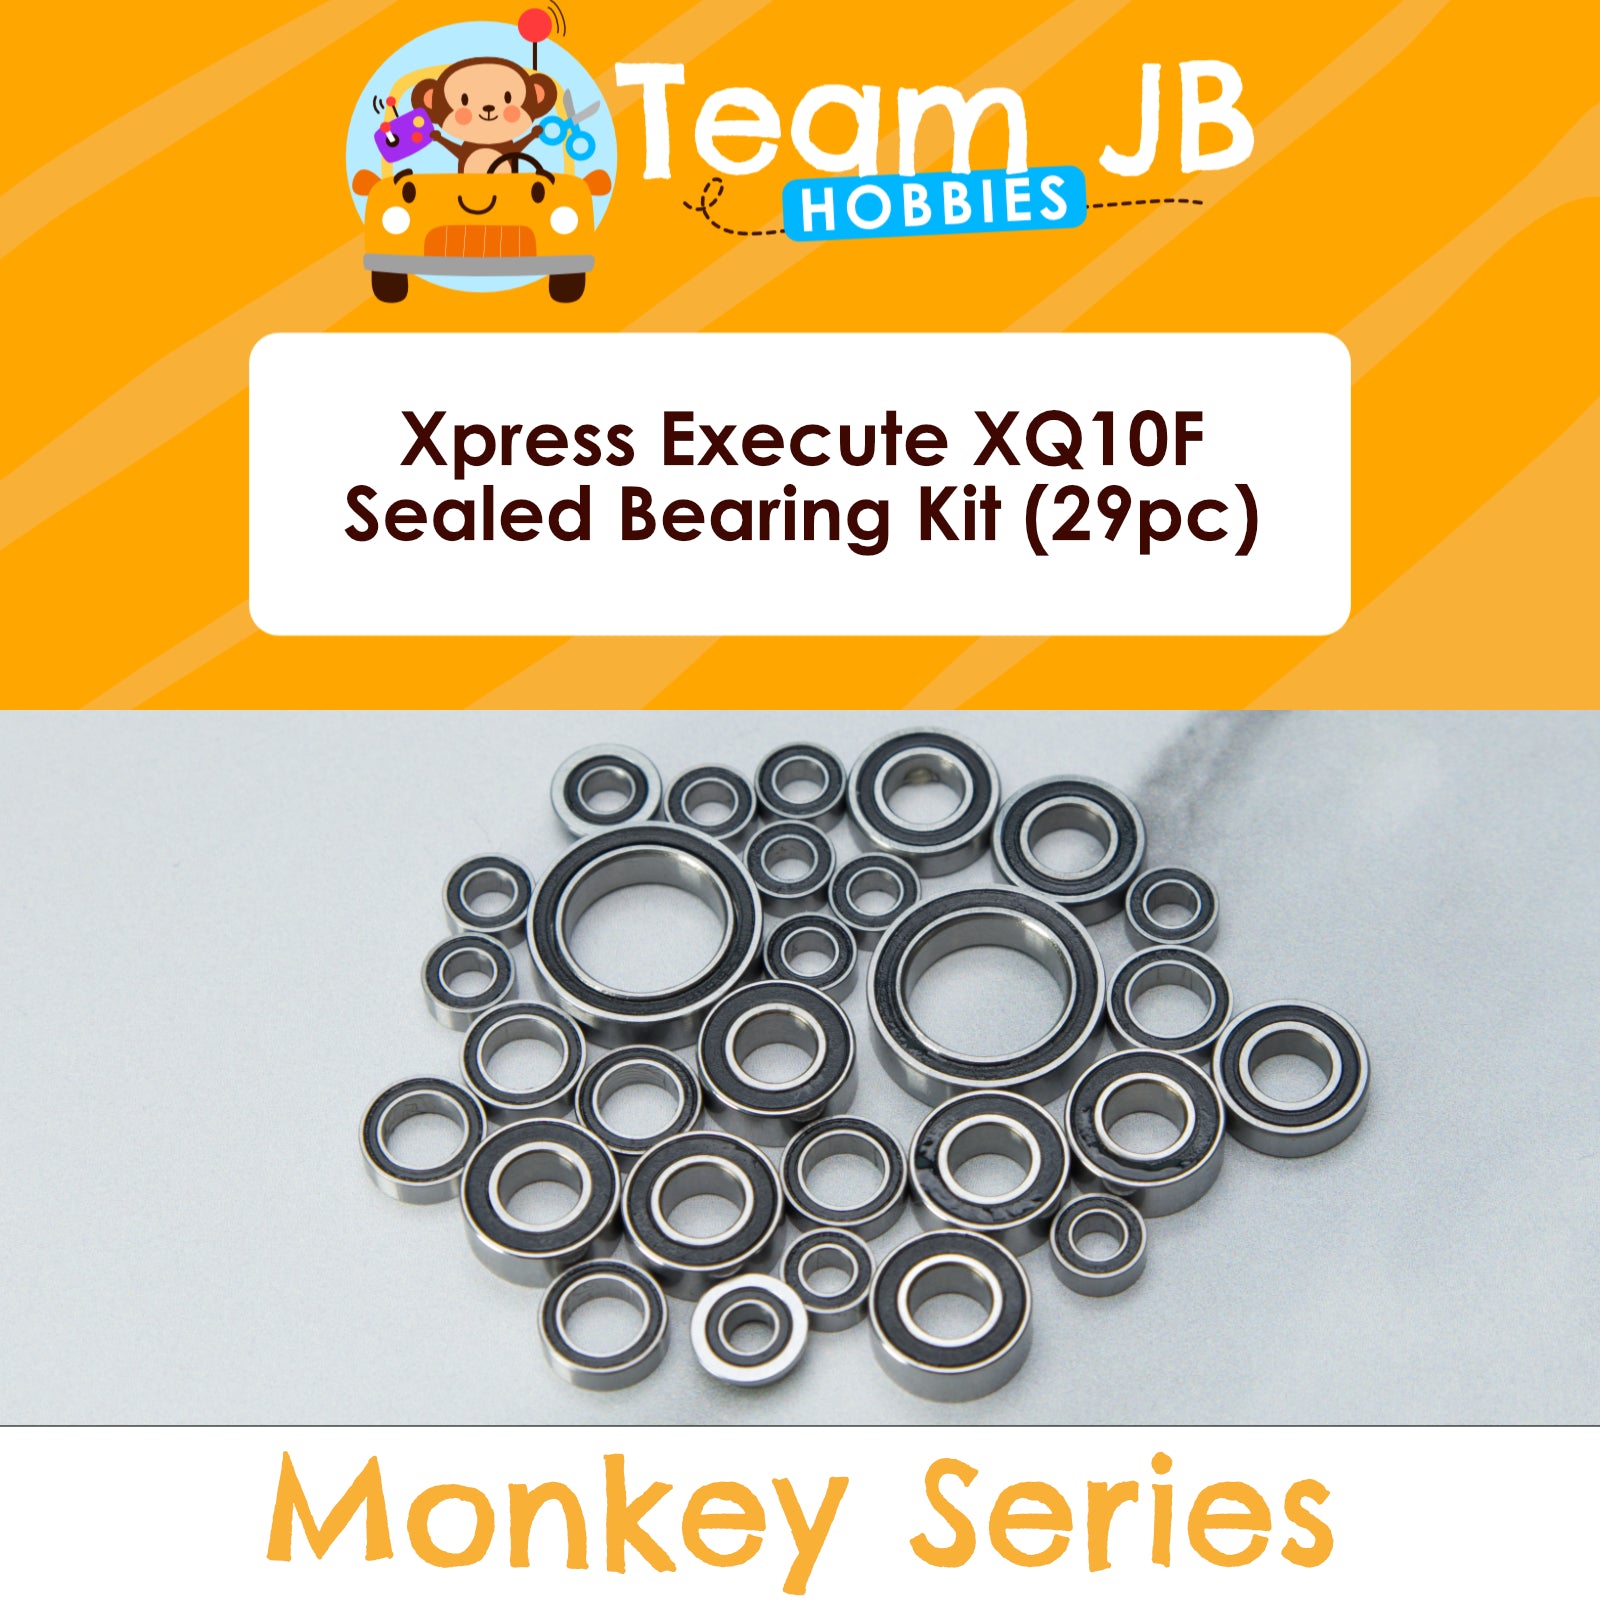 Xpress Execute XQ10F - Sealed Bearing Kit